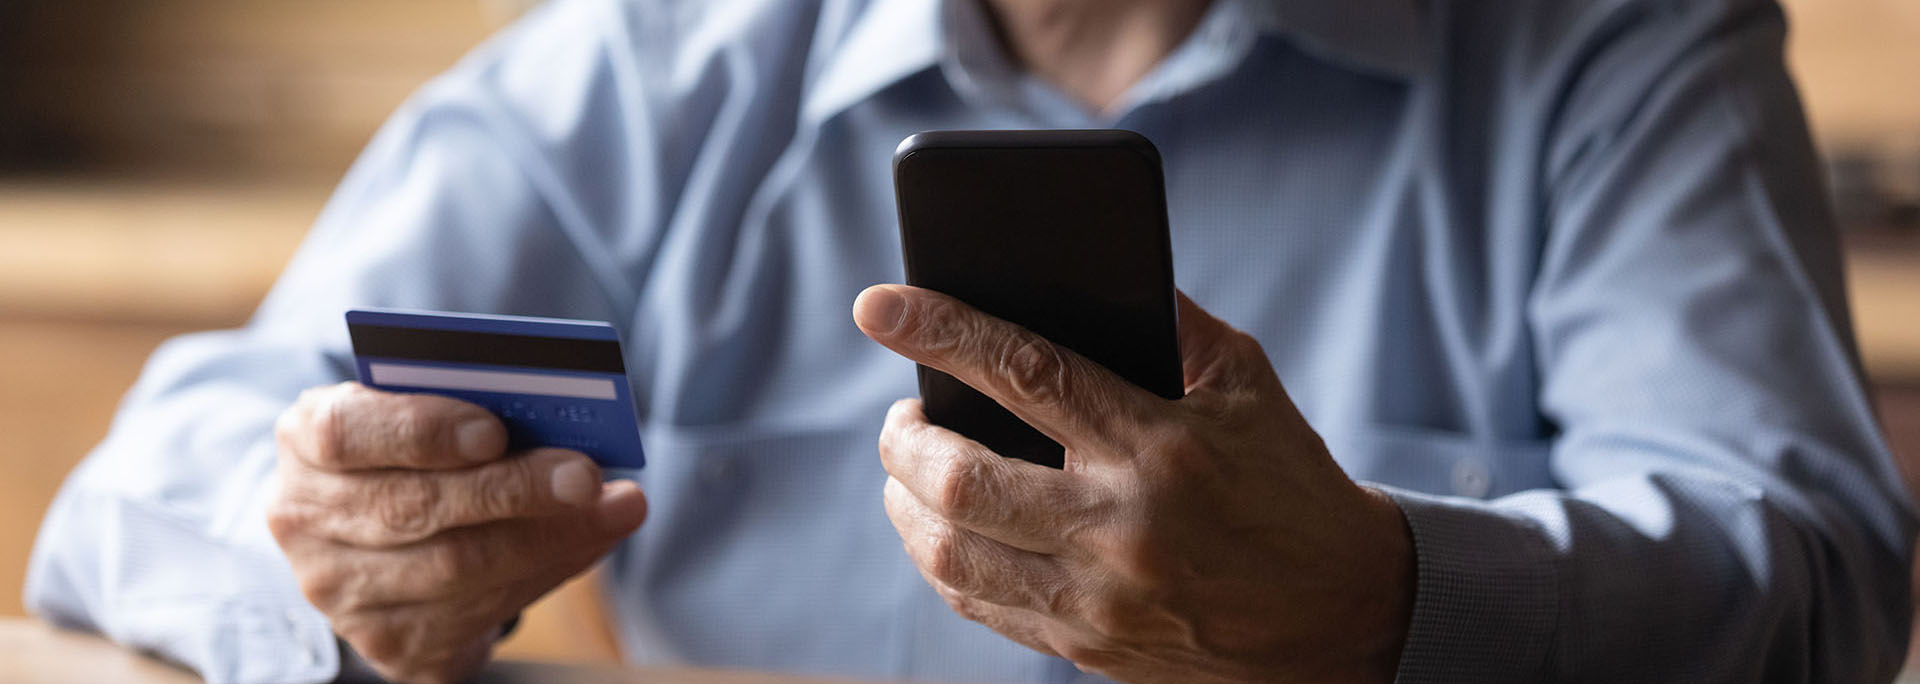 Close up mature man using phone, holding plastic credit card stock photo